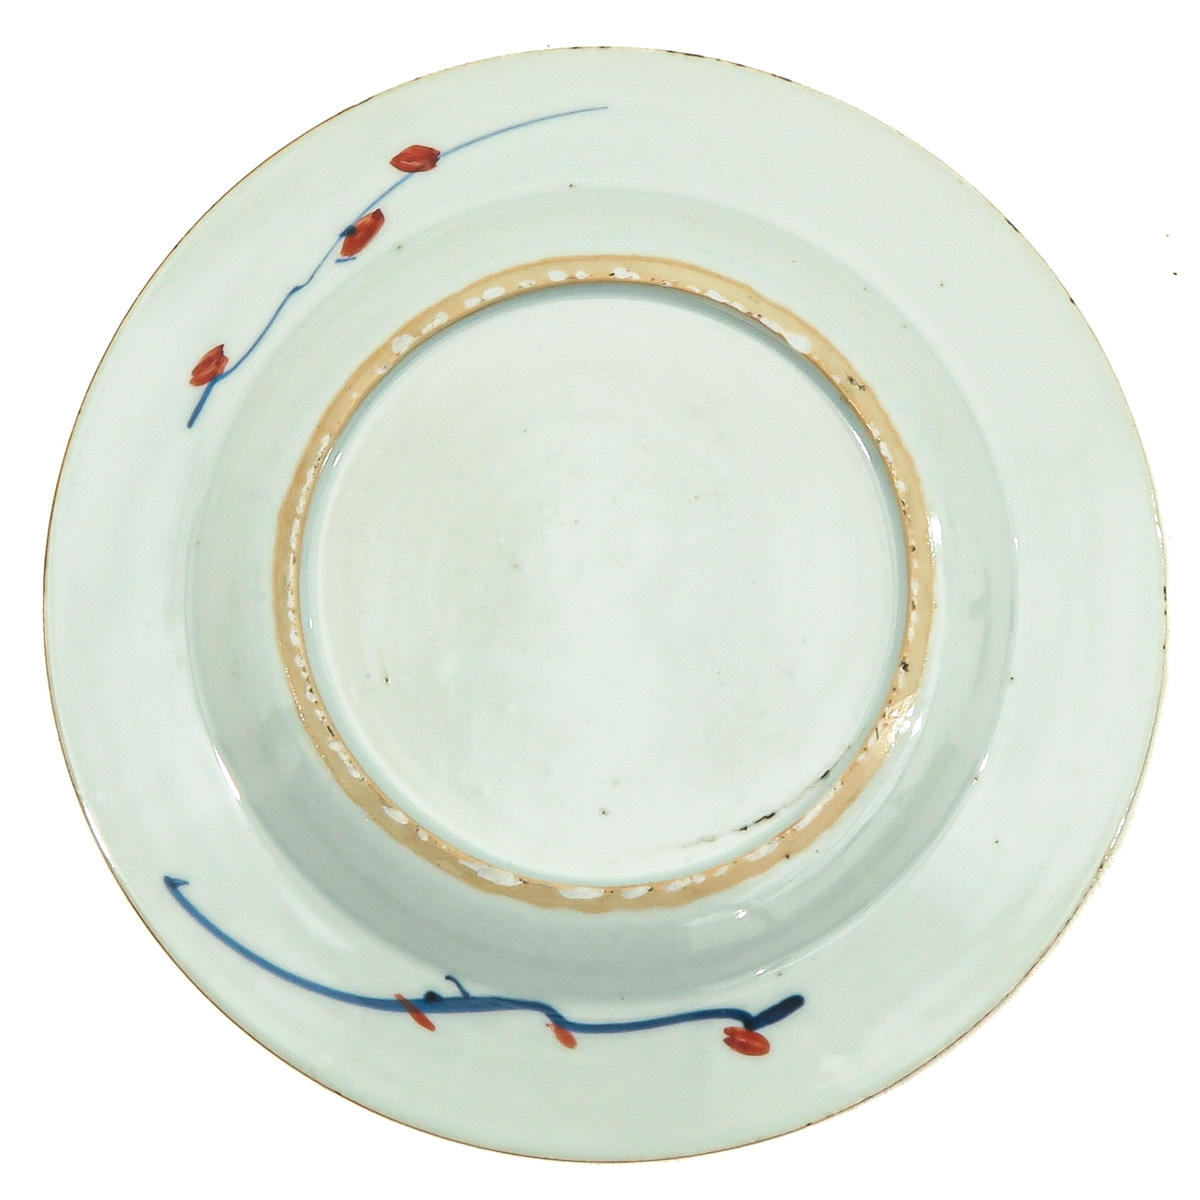 A Series of 3 Imari Plates - Image 6 of 10